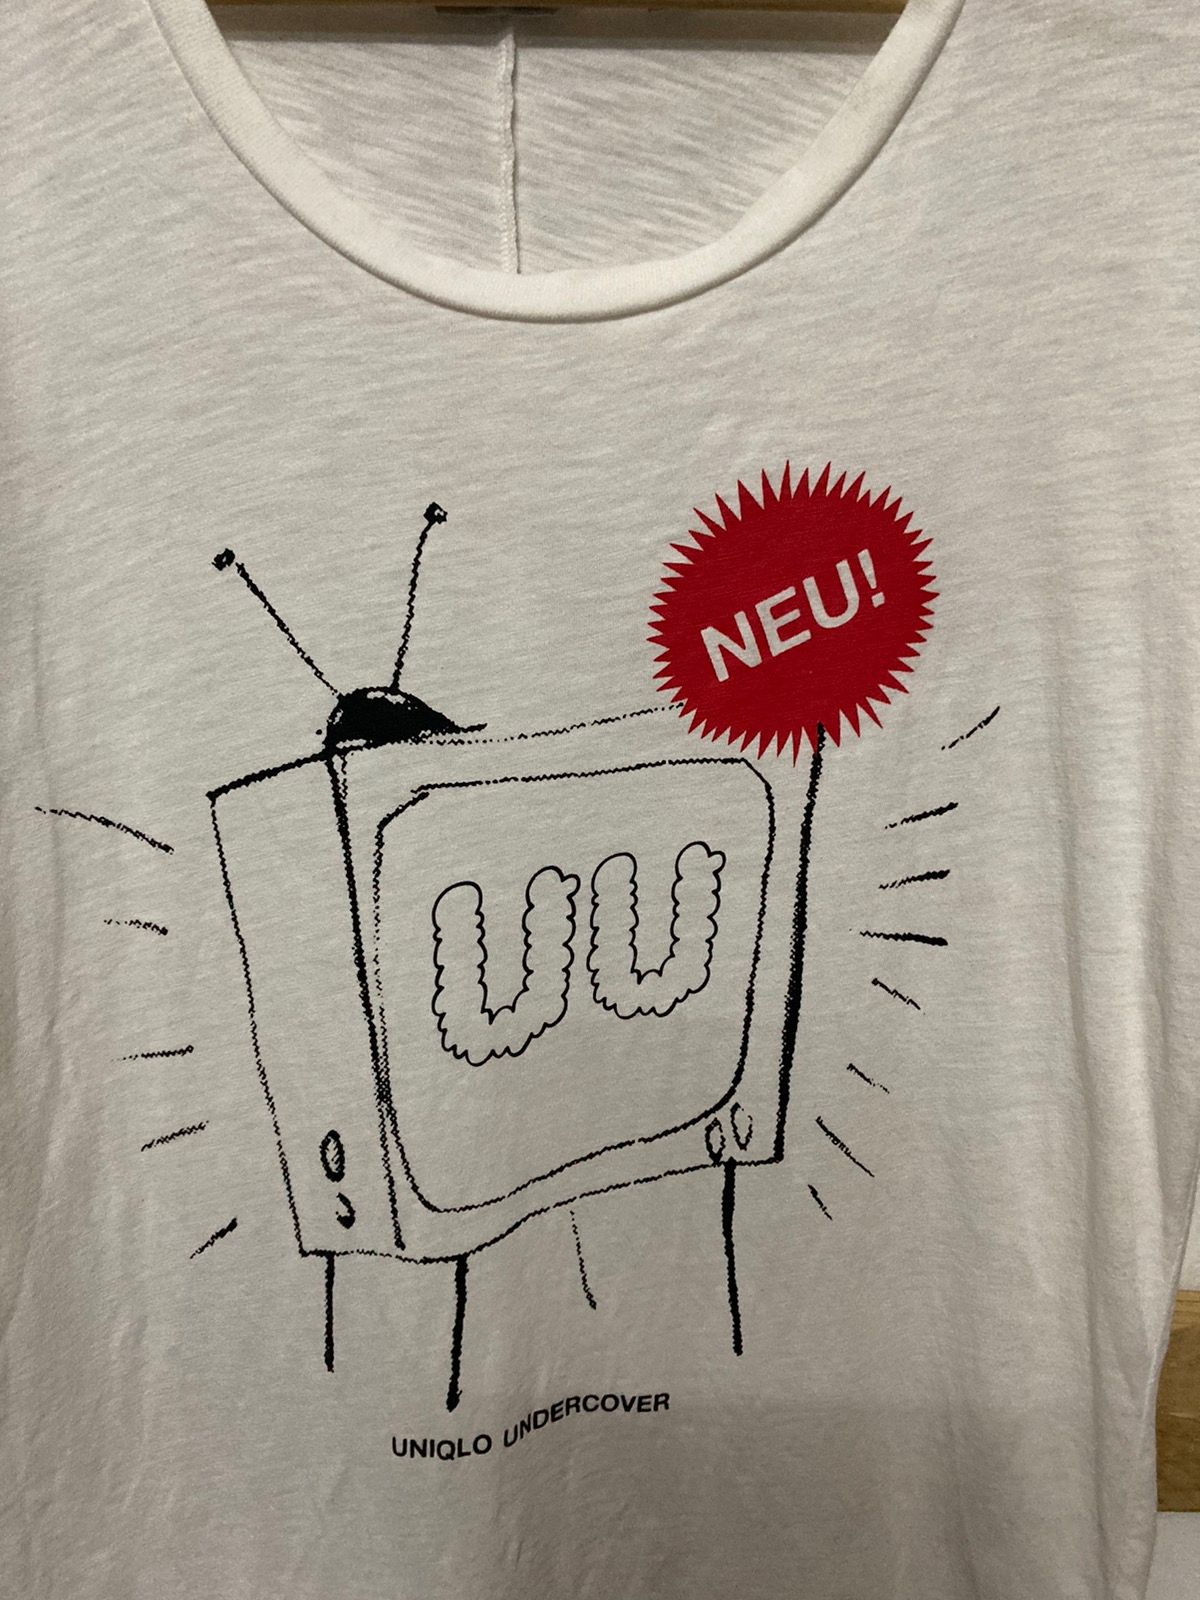 Uniqlo x Undercover Neu! Television Tshirt - 5